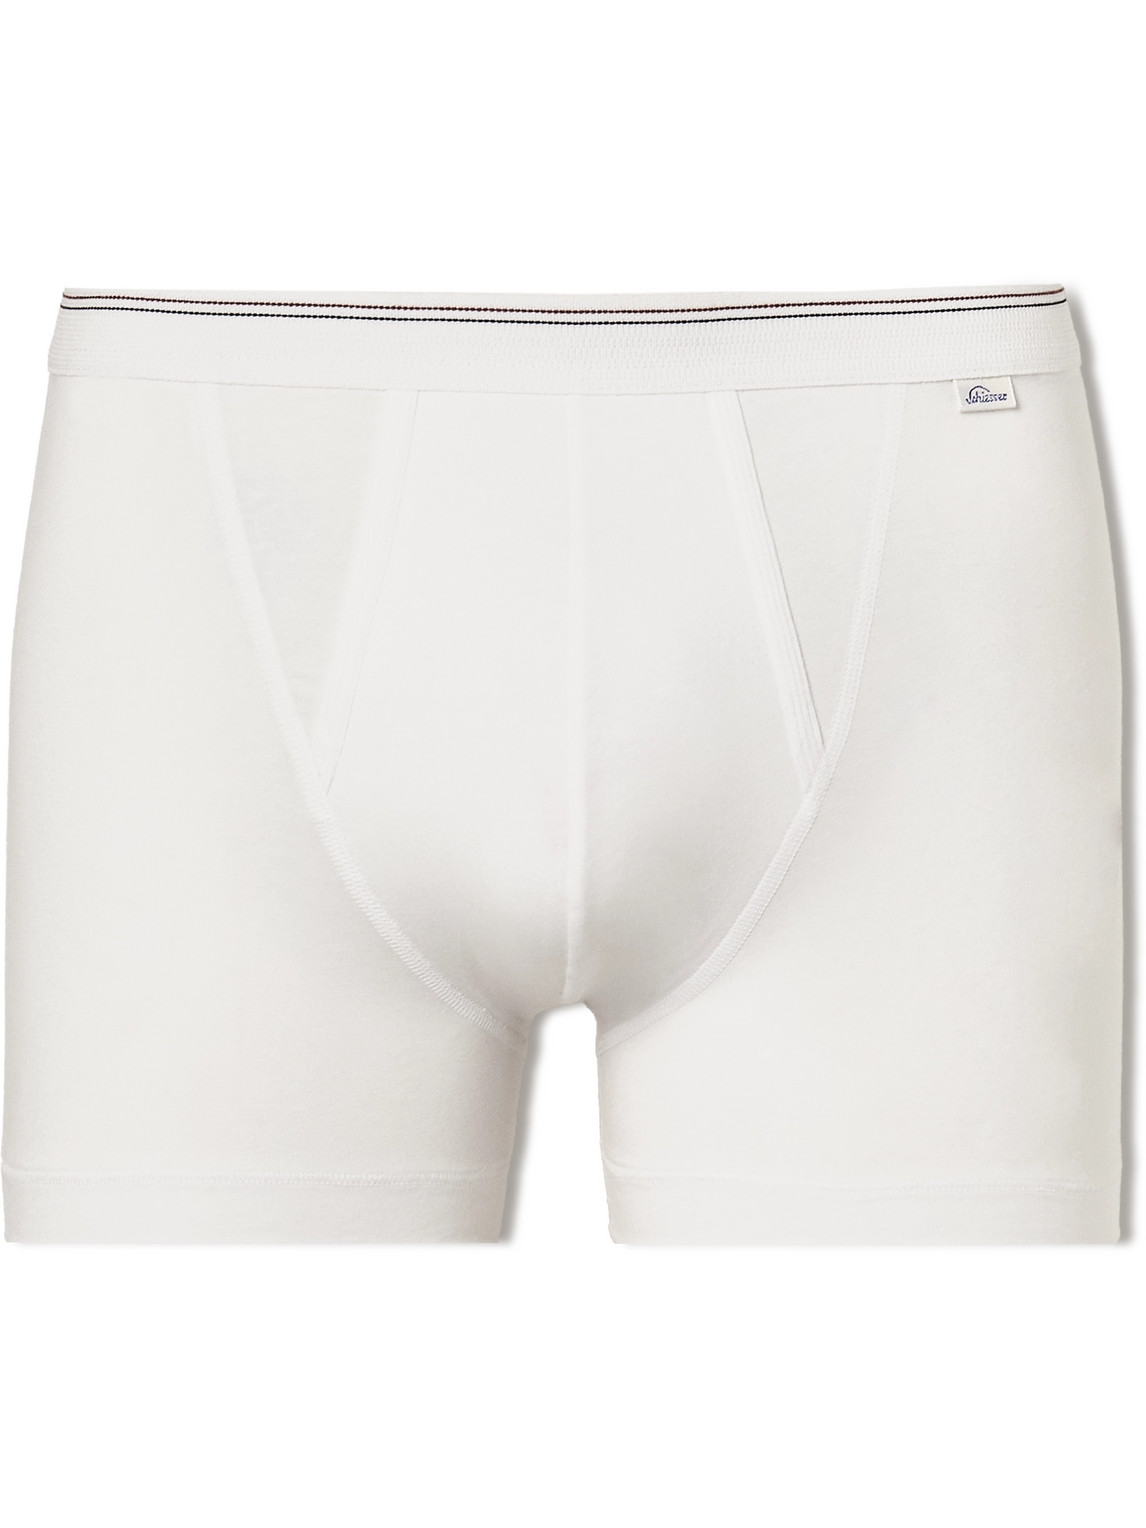 Schiesser - Lorenz Jersey Boxer Shorts - Men - White - M for Men